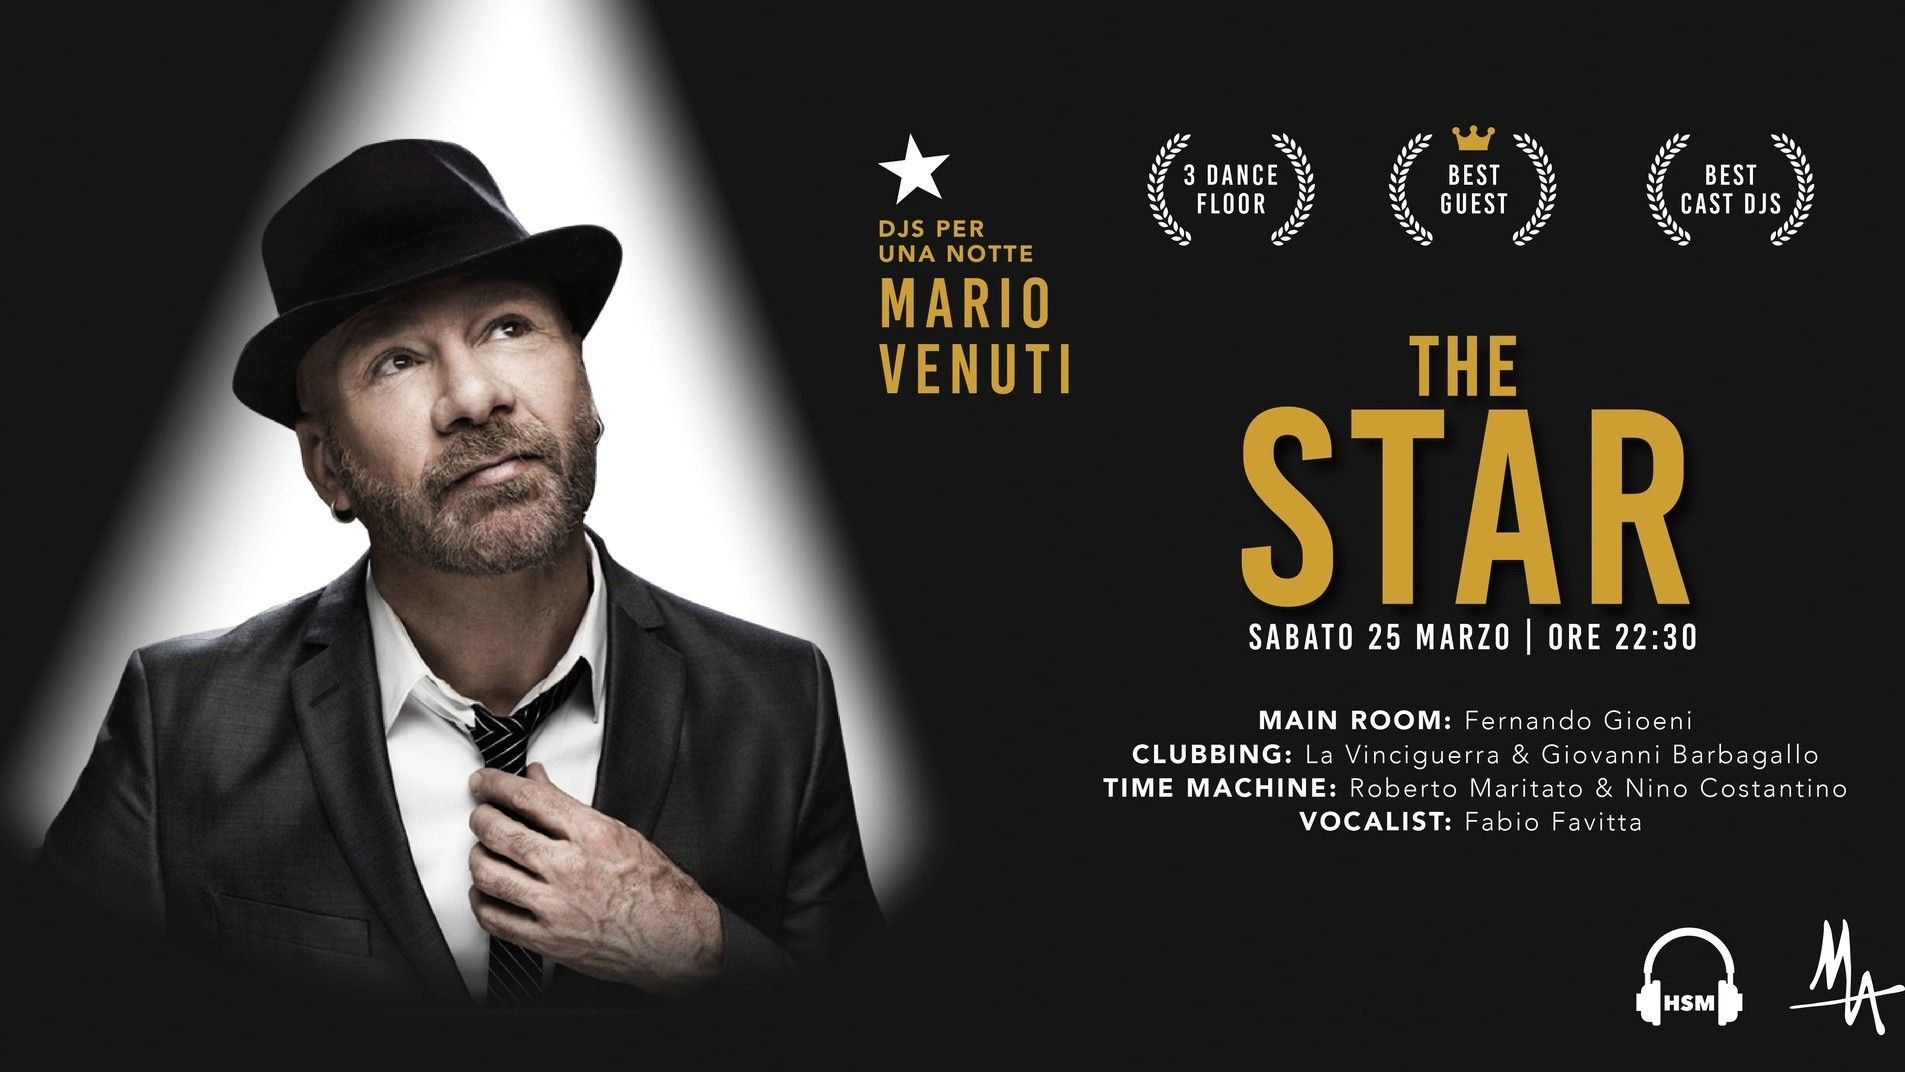 The Star - Special Guest: Mario Venuti Djs per una notte